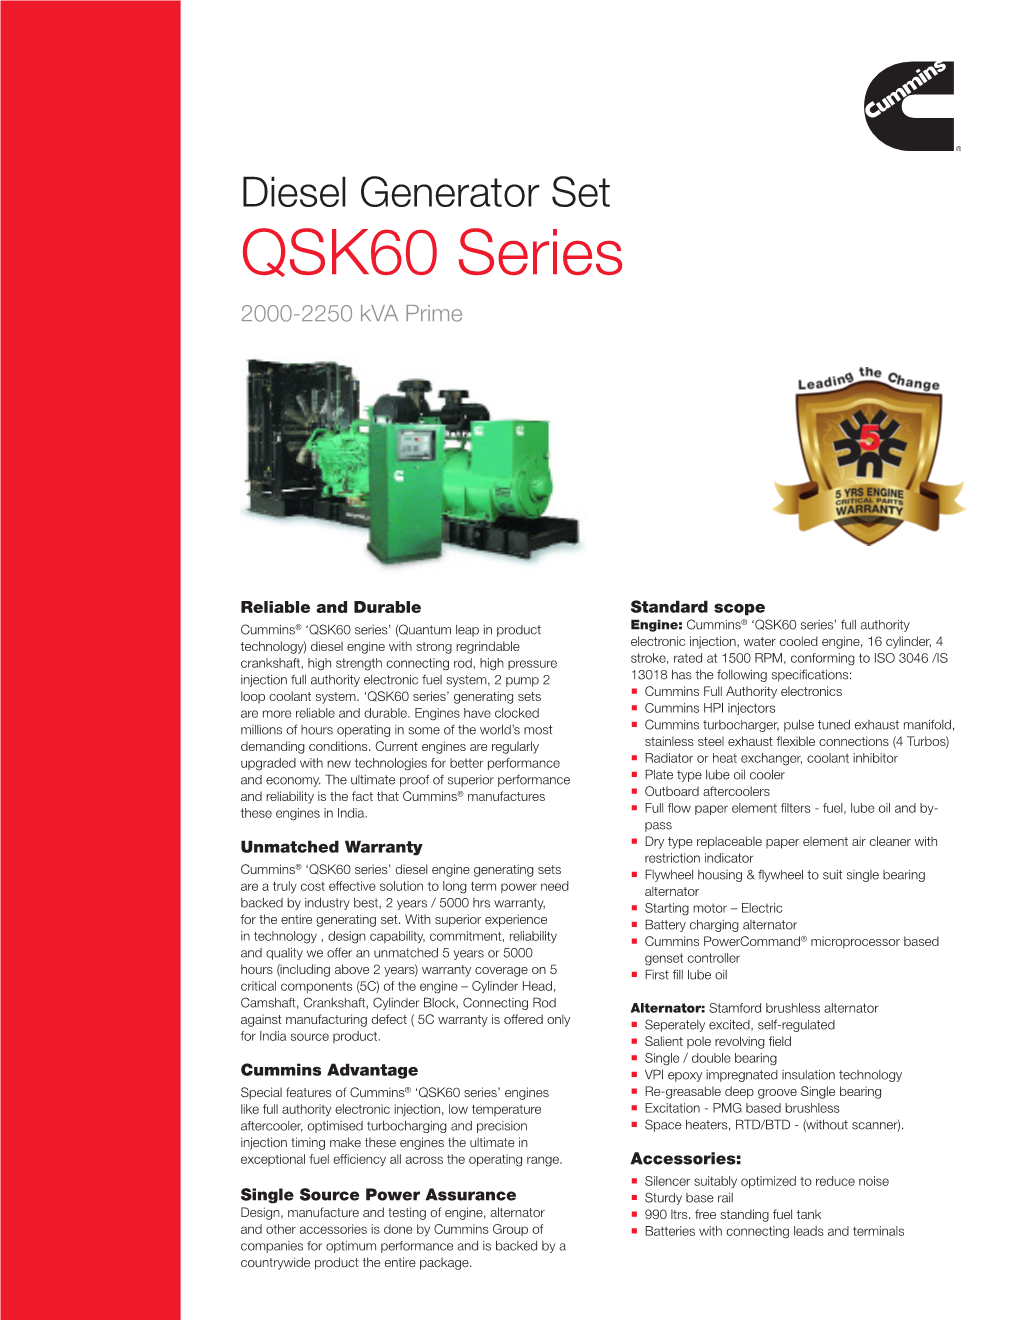 Diesel Generator Set QSK60 Series 2000-2250 Kva Prime